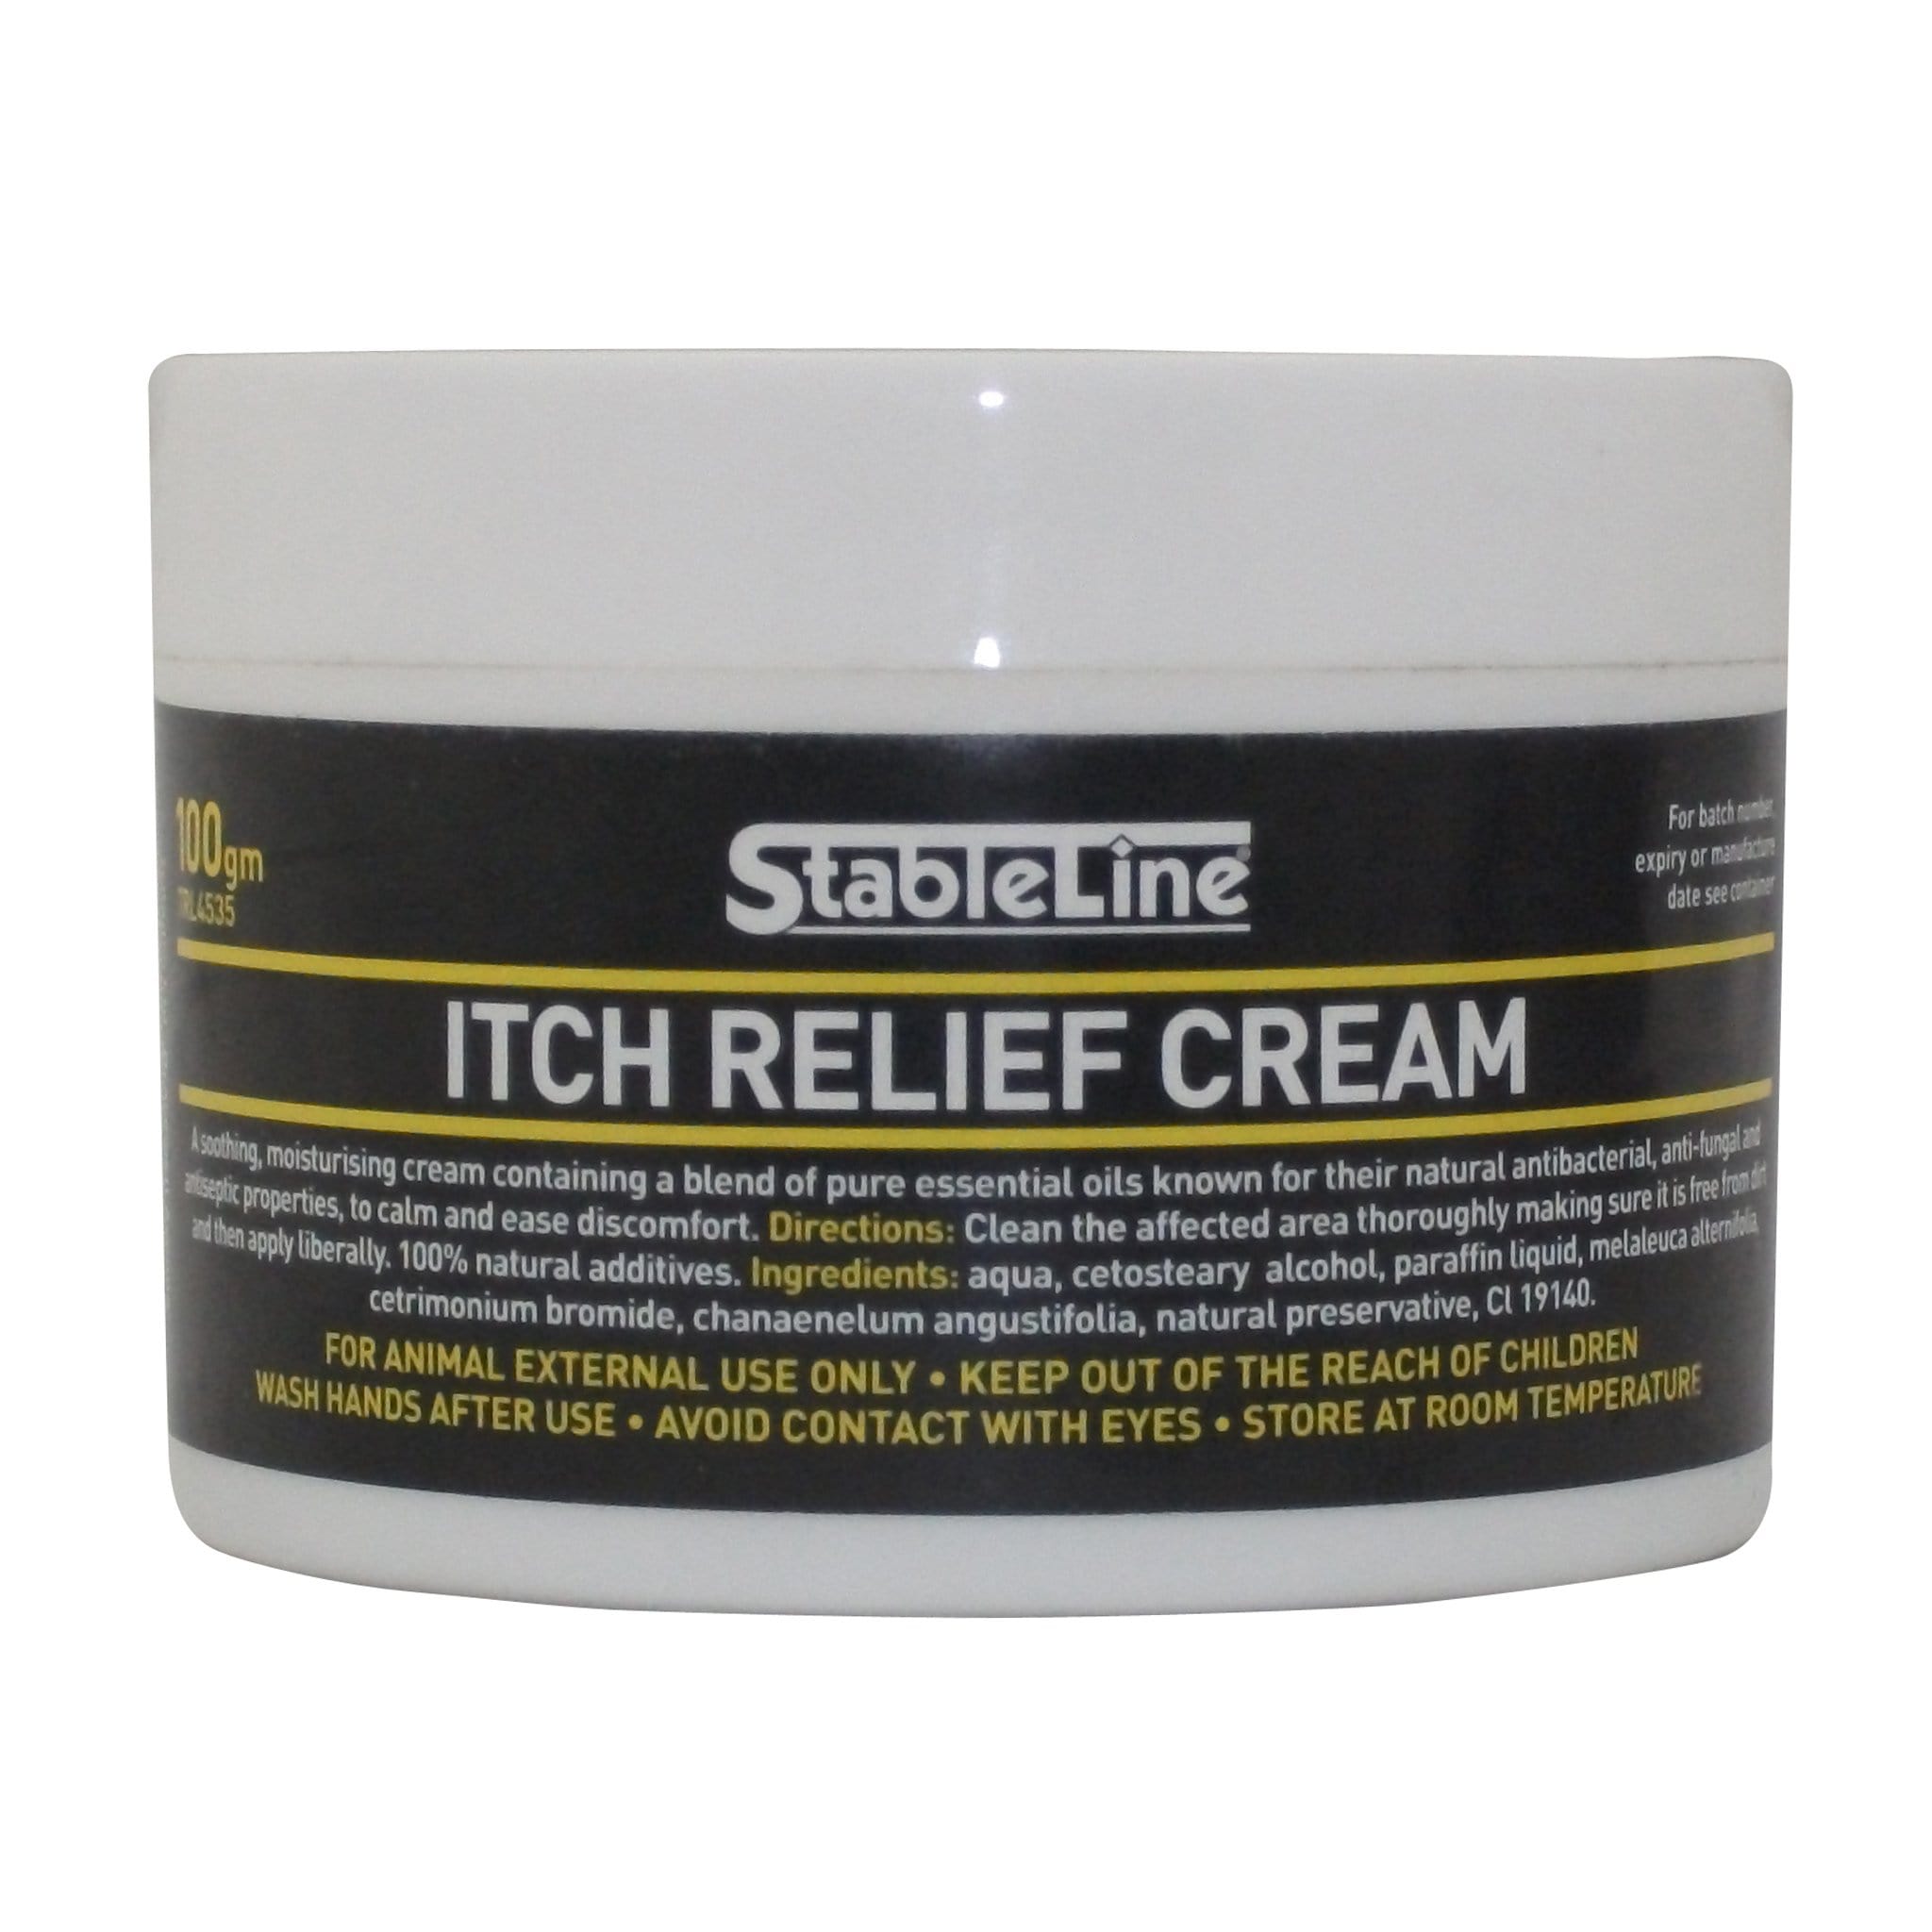 StableLine Itch Relief Cream 100g TRL4535